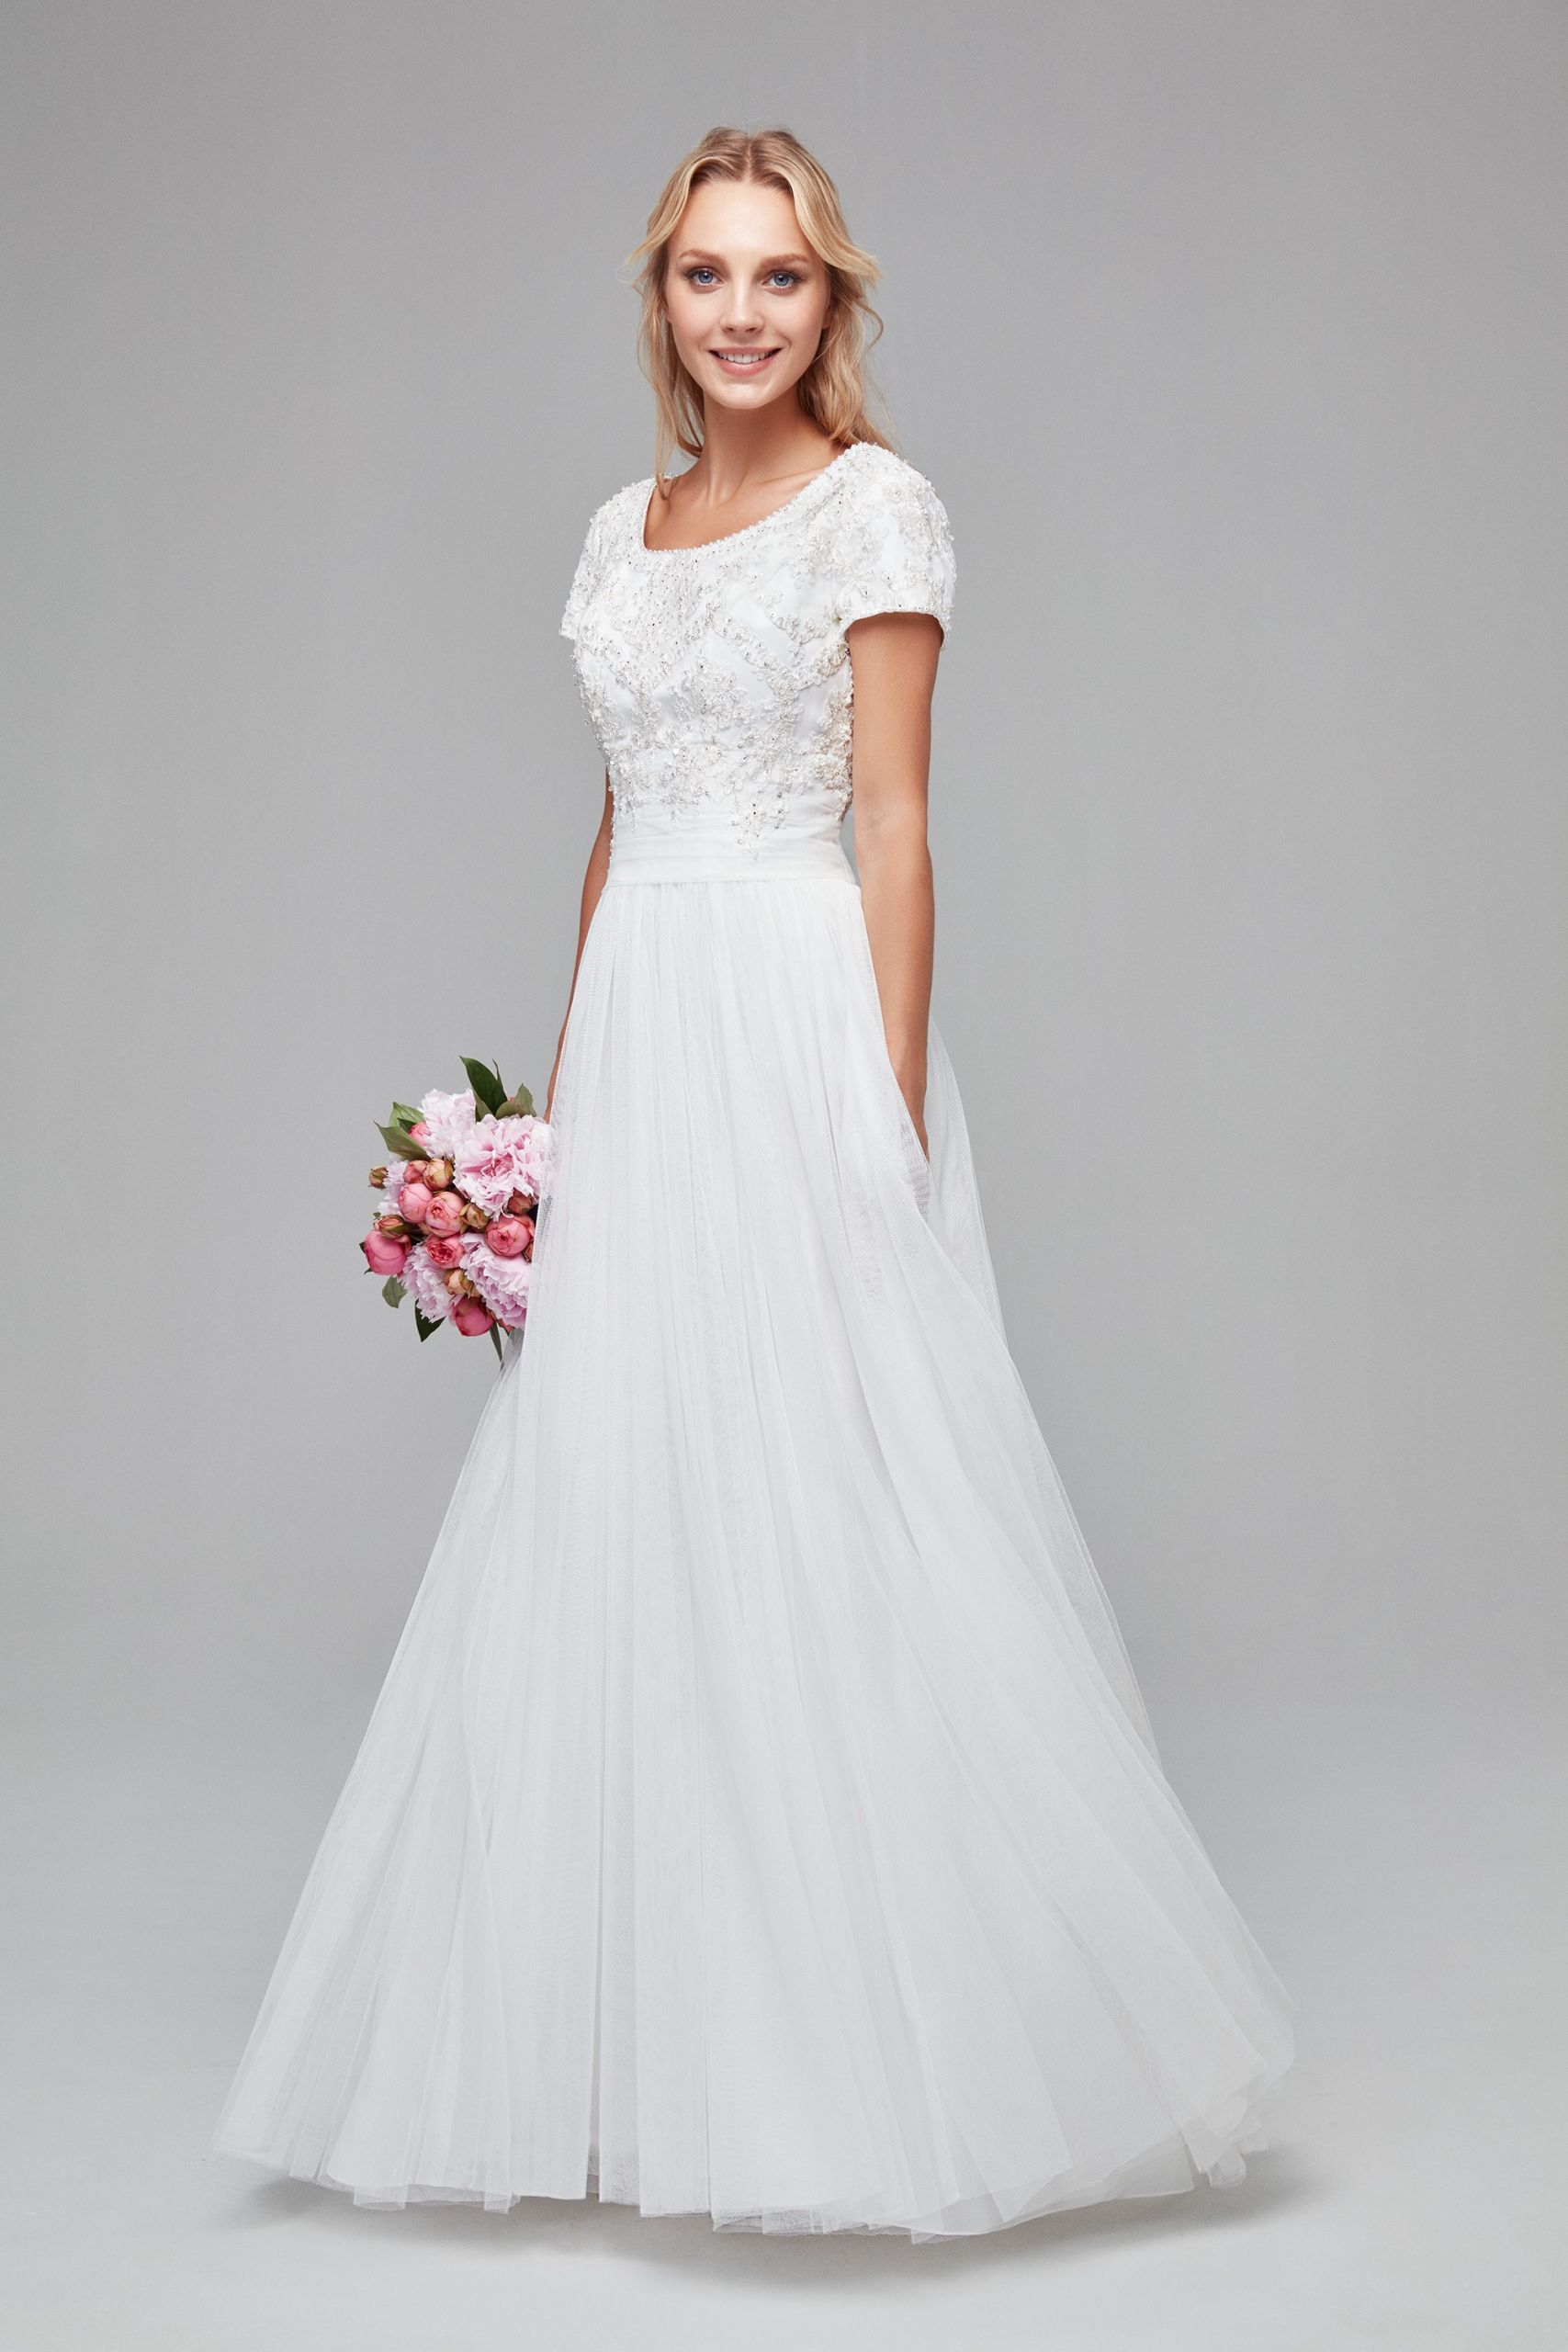 Short Sleeve Wedding Gown
 Modest Short Sleeve Petite A Line Wedding Dress Style